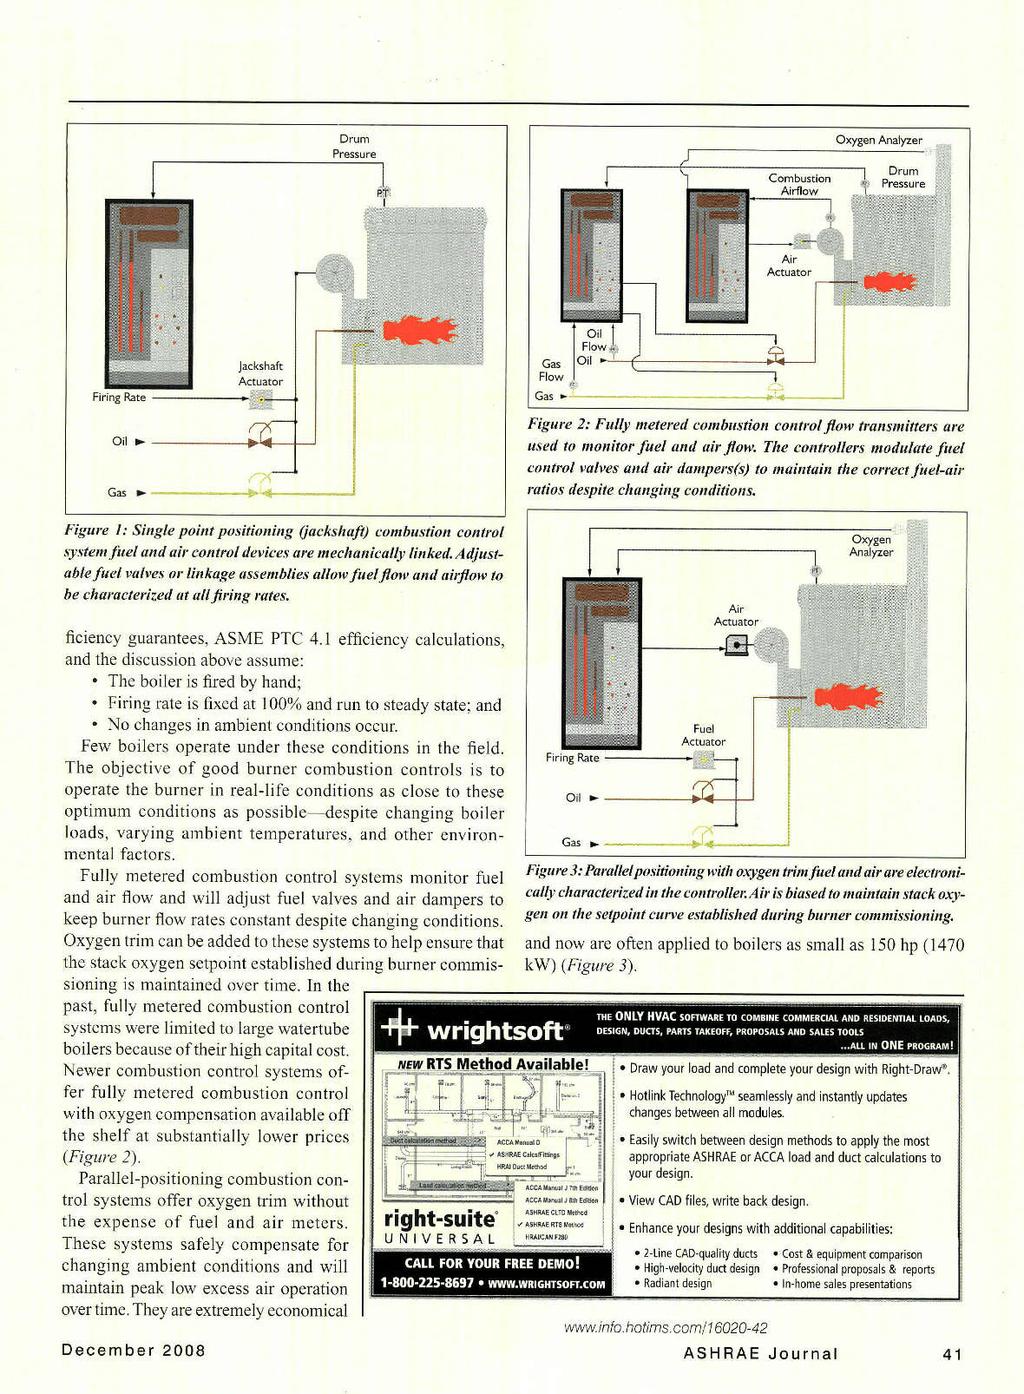 Drum Pressure Oxygen Analyzer PT Firing Rate EJackshaft Gas Flo Gas,- Oil 0.